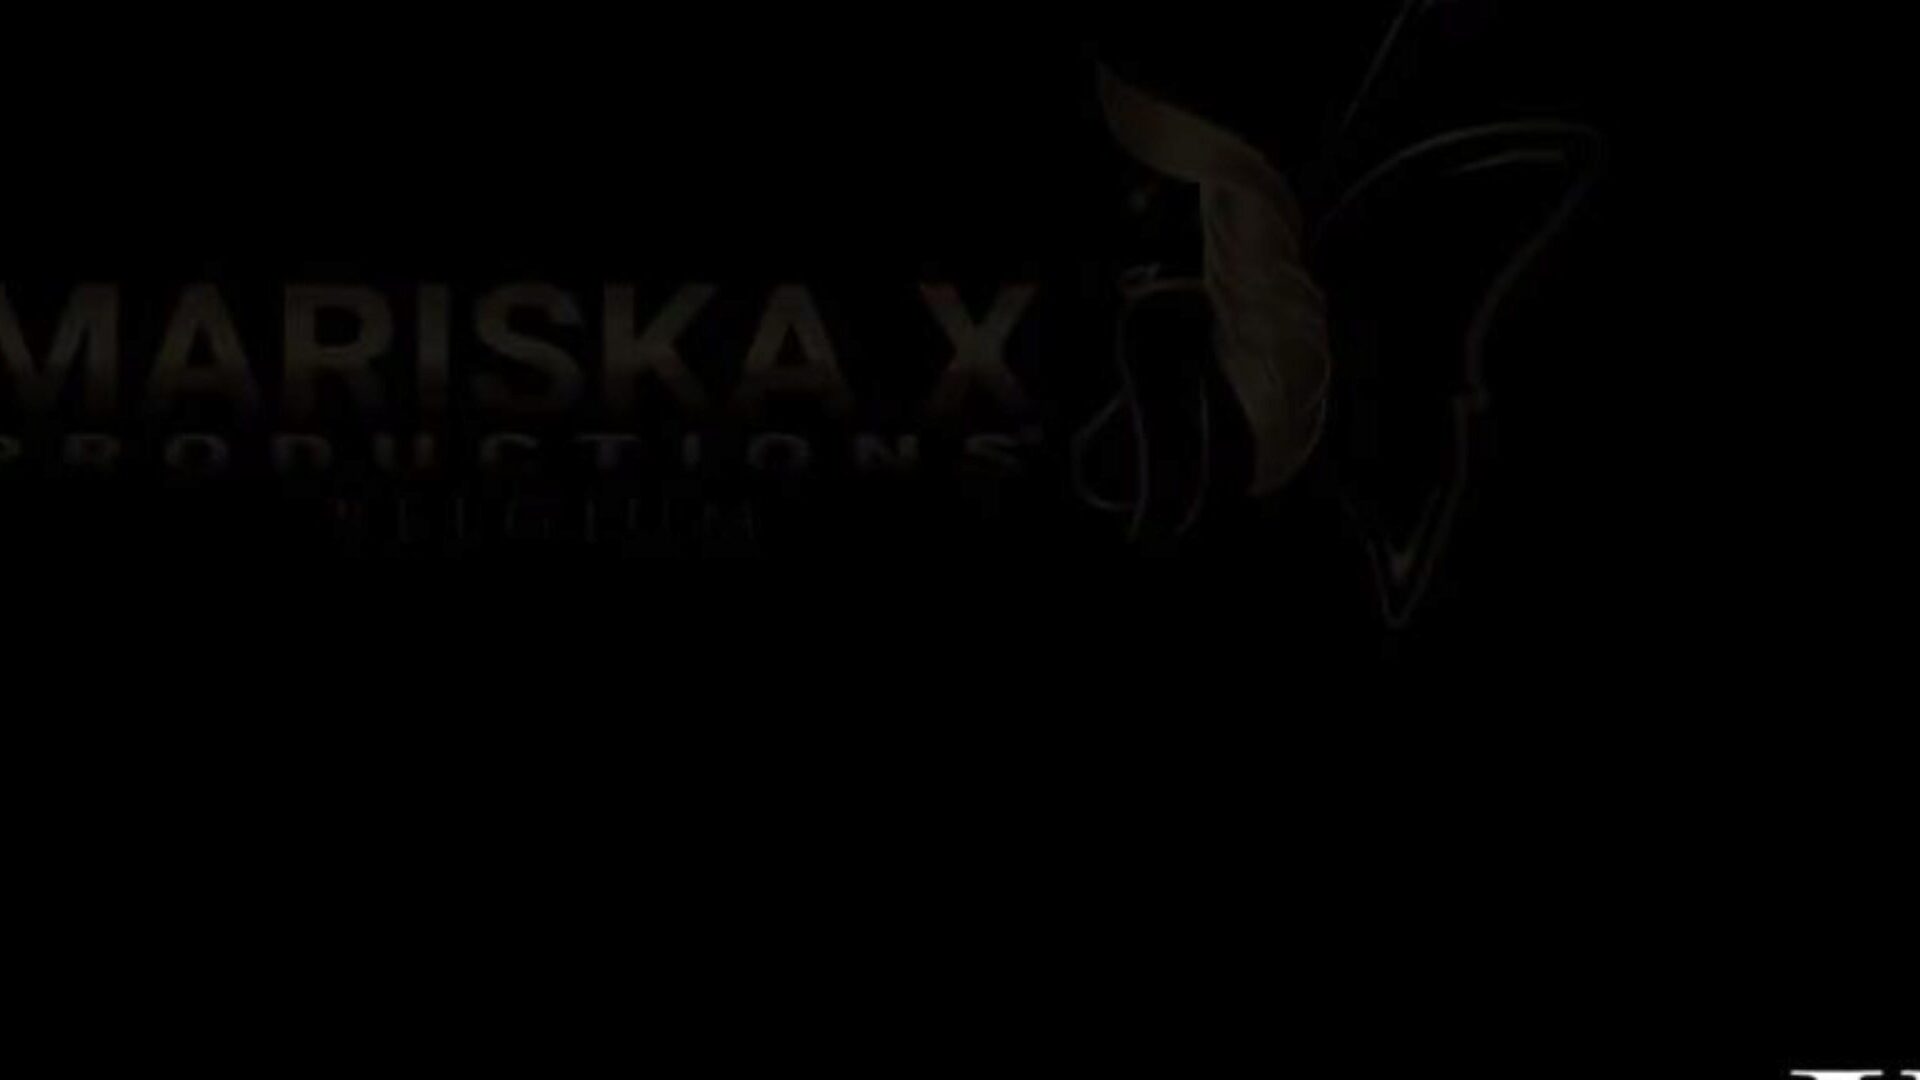 mariskax טקסס פטי כפול שנשאב על ידי שני מנגלים